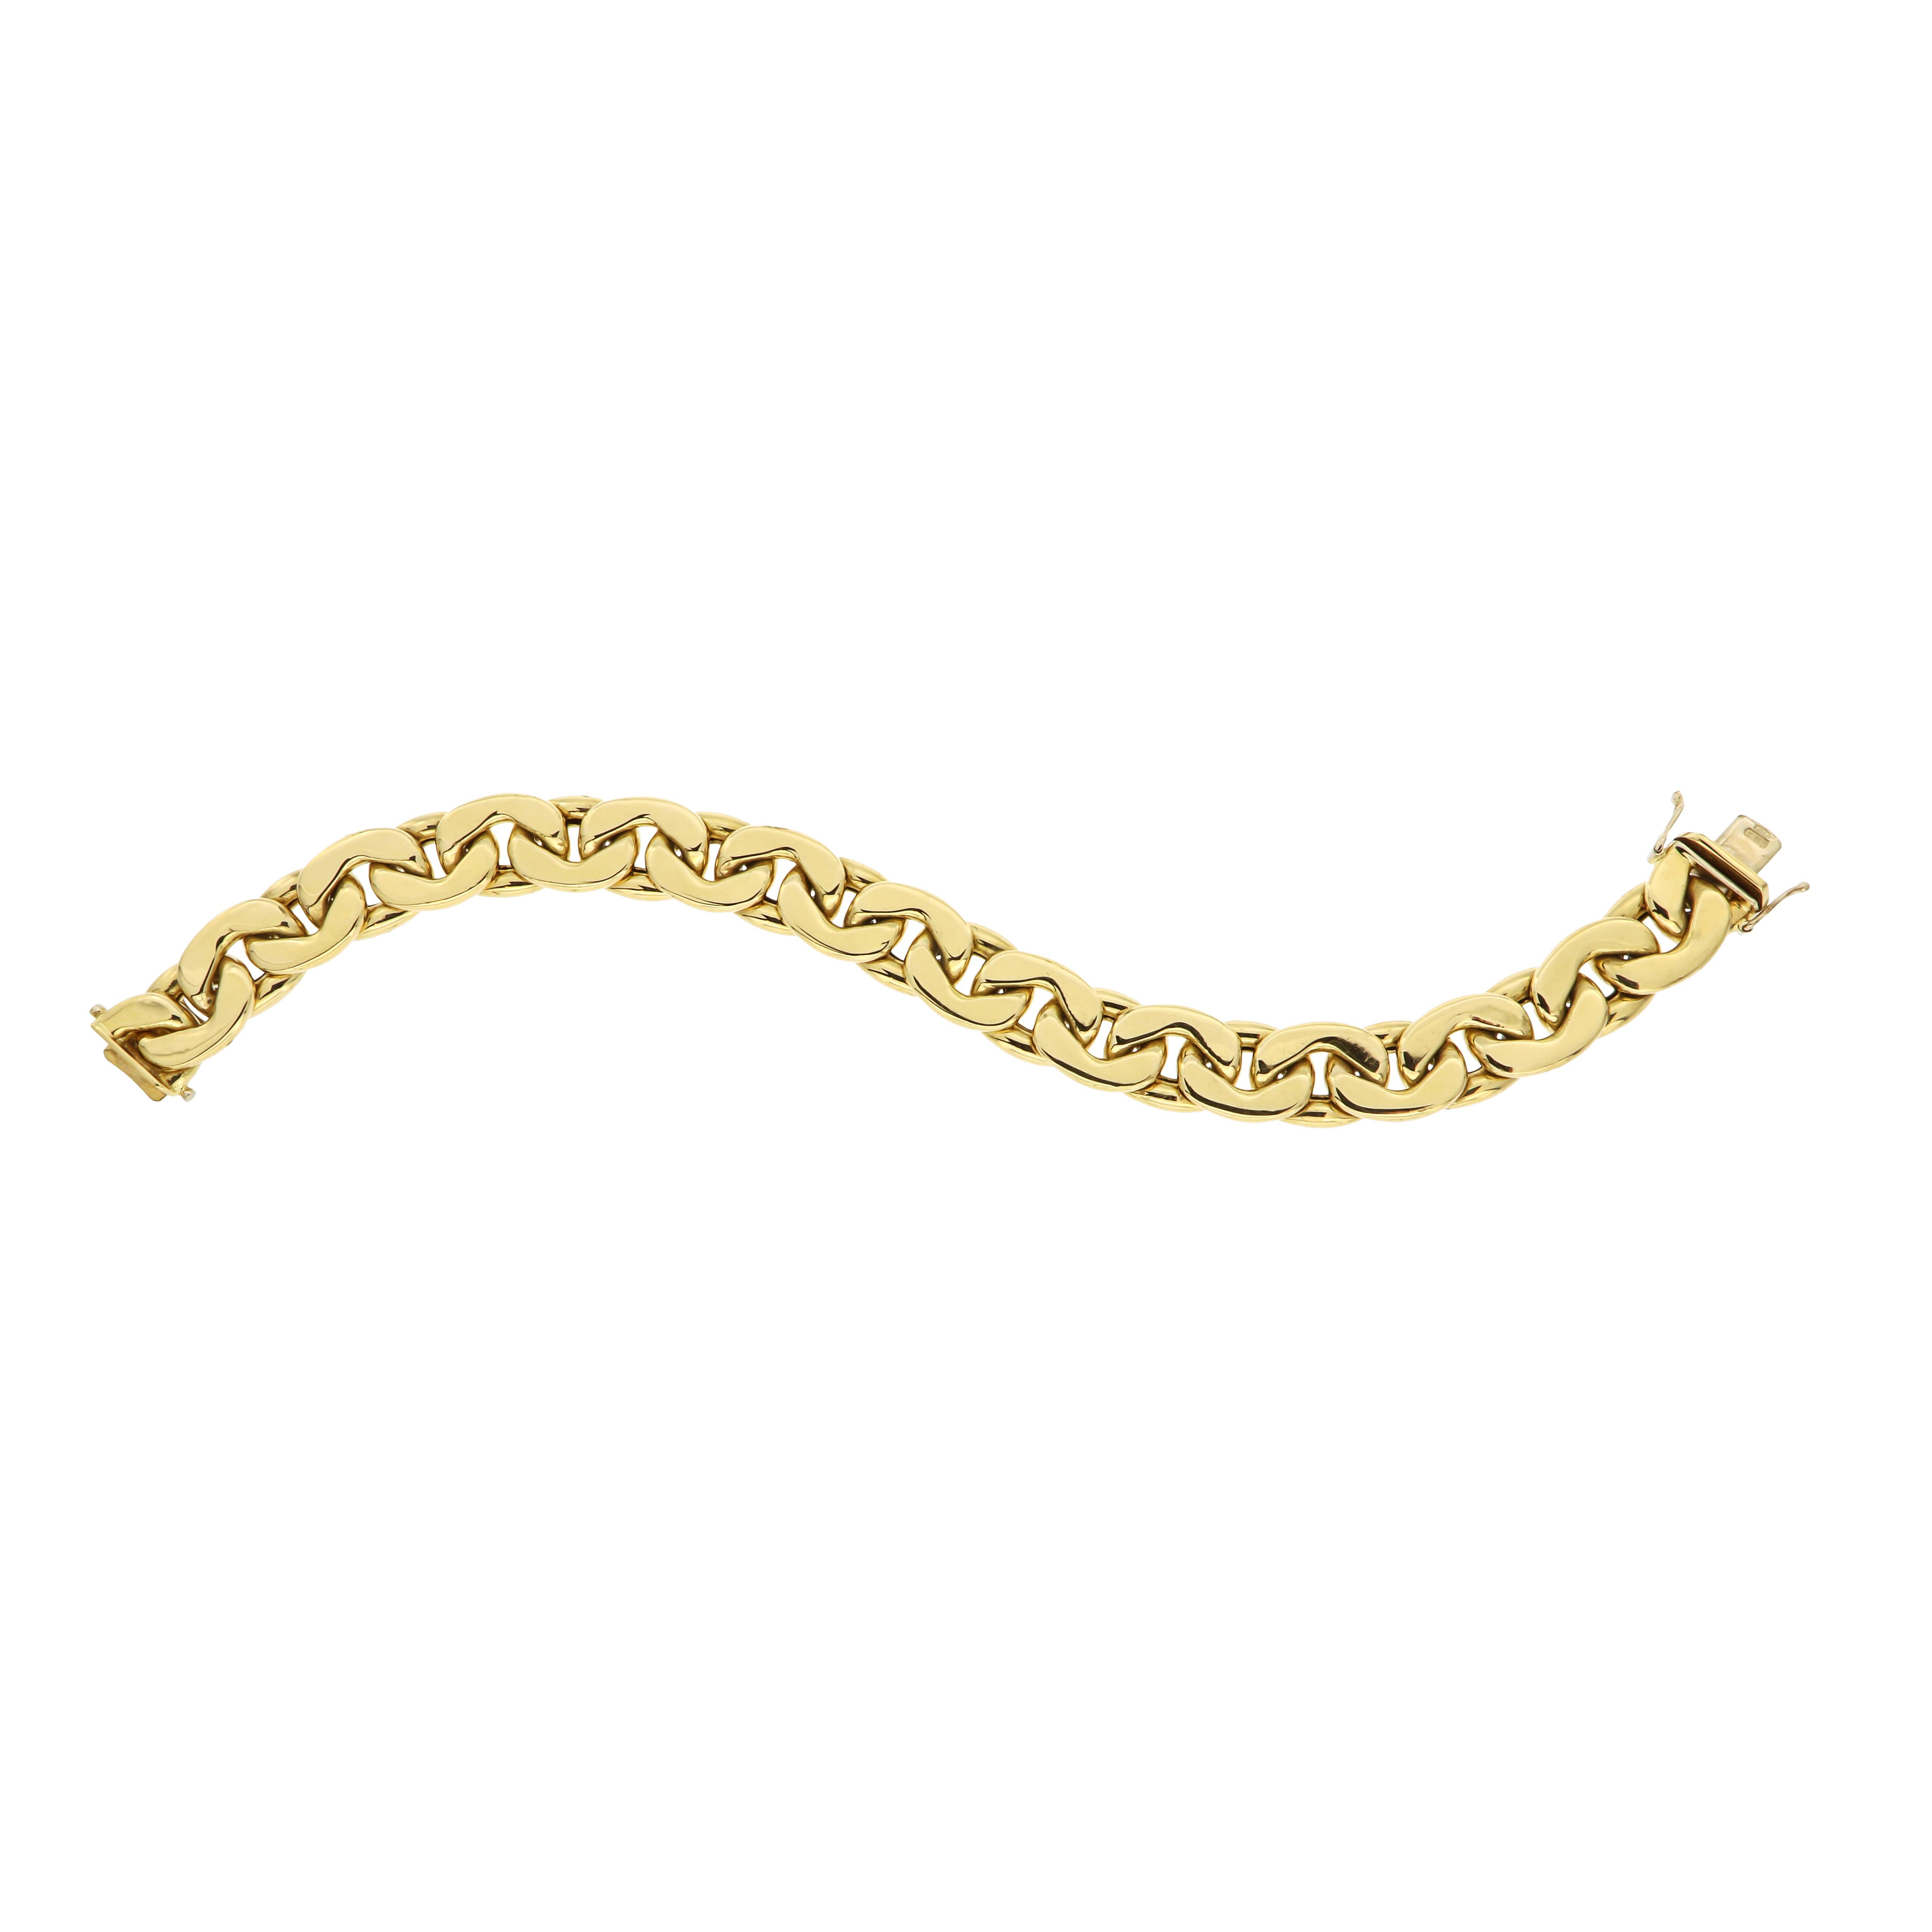 18 Karat Yellow Gold Groumette Bracelet Handcraft in Italy by Botta Gioielli